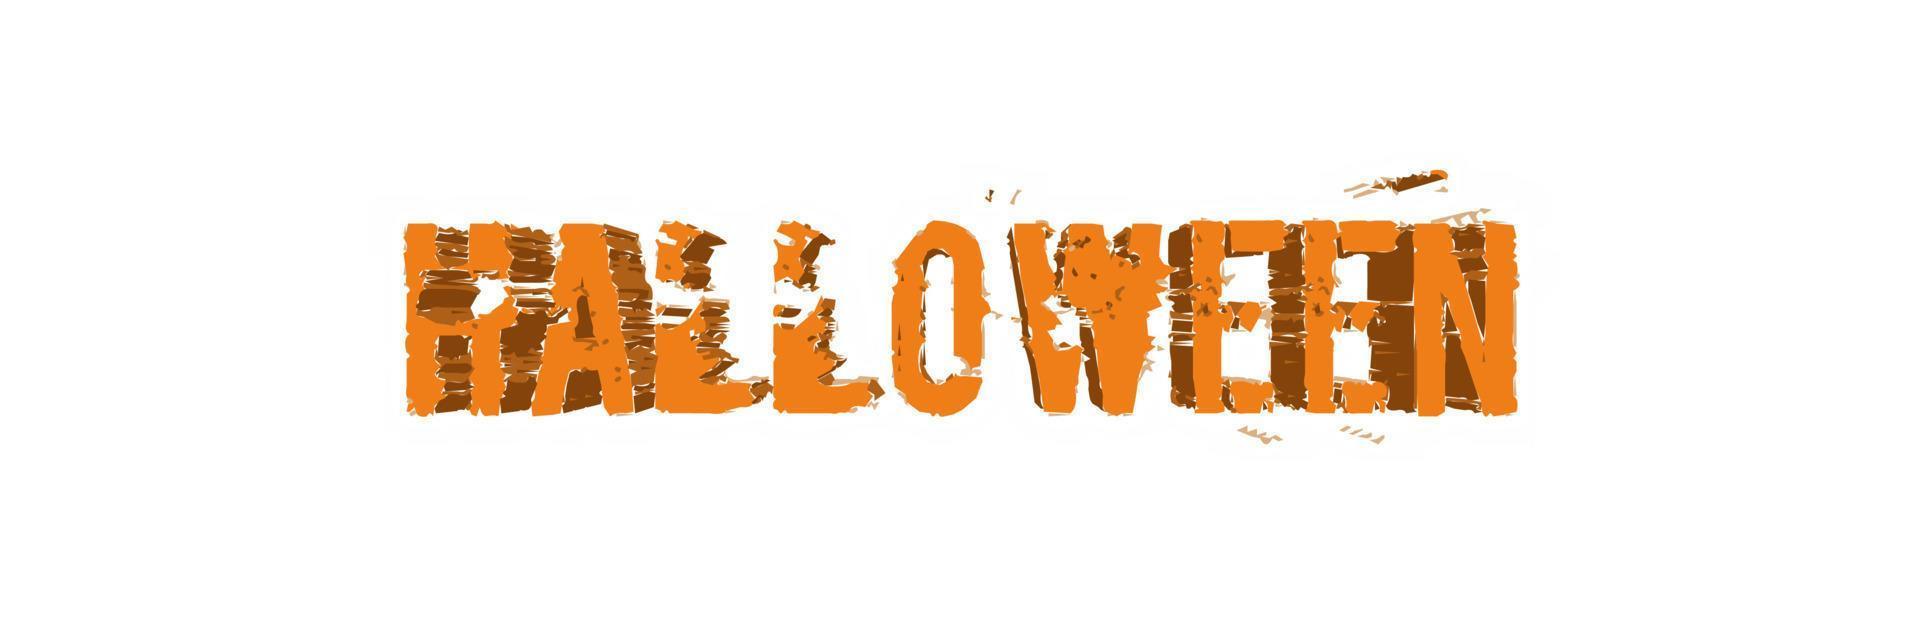 vektor bild av halloween text i orange colo